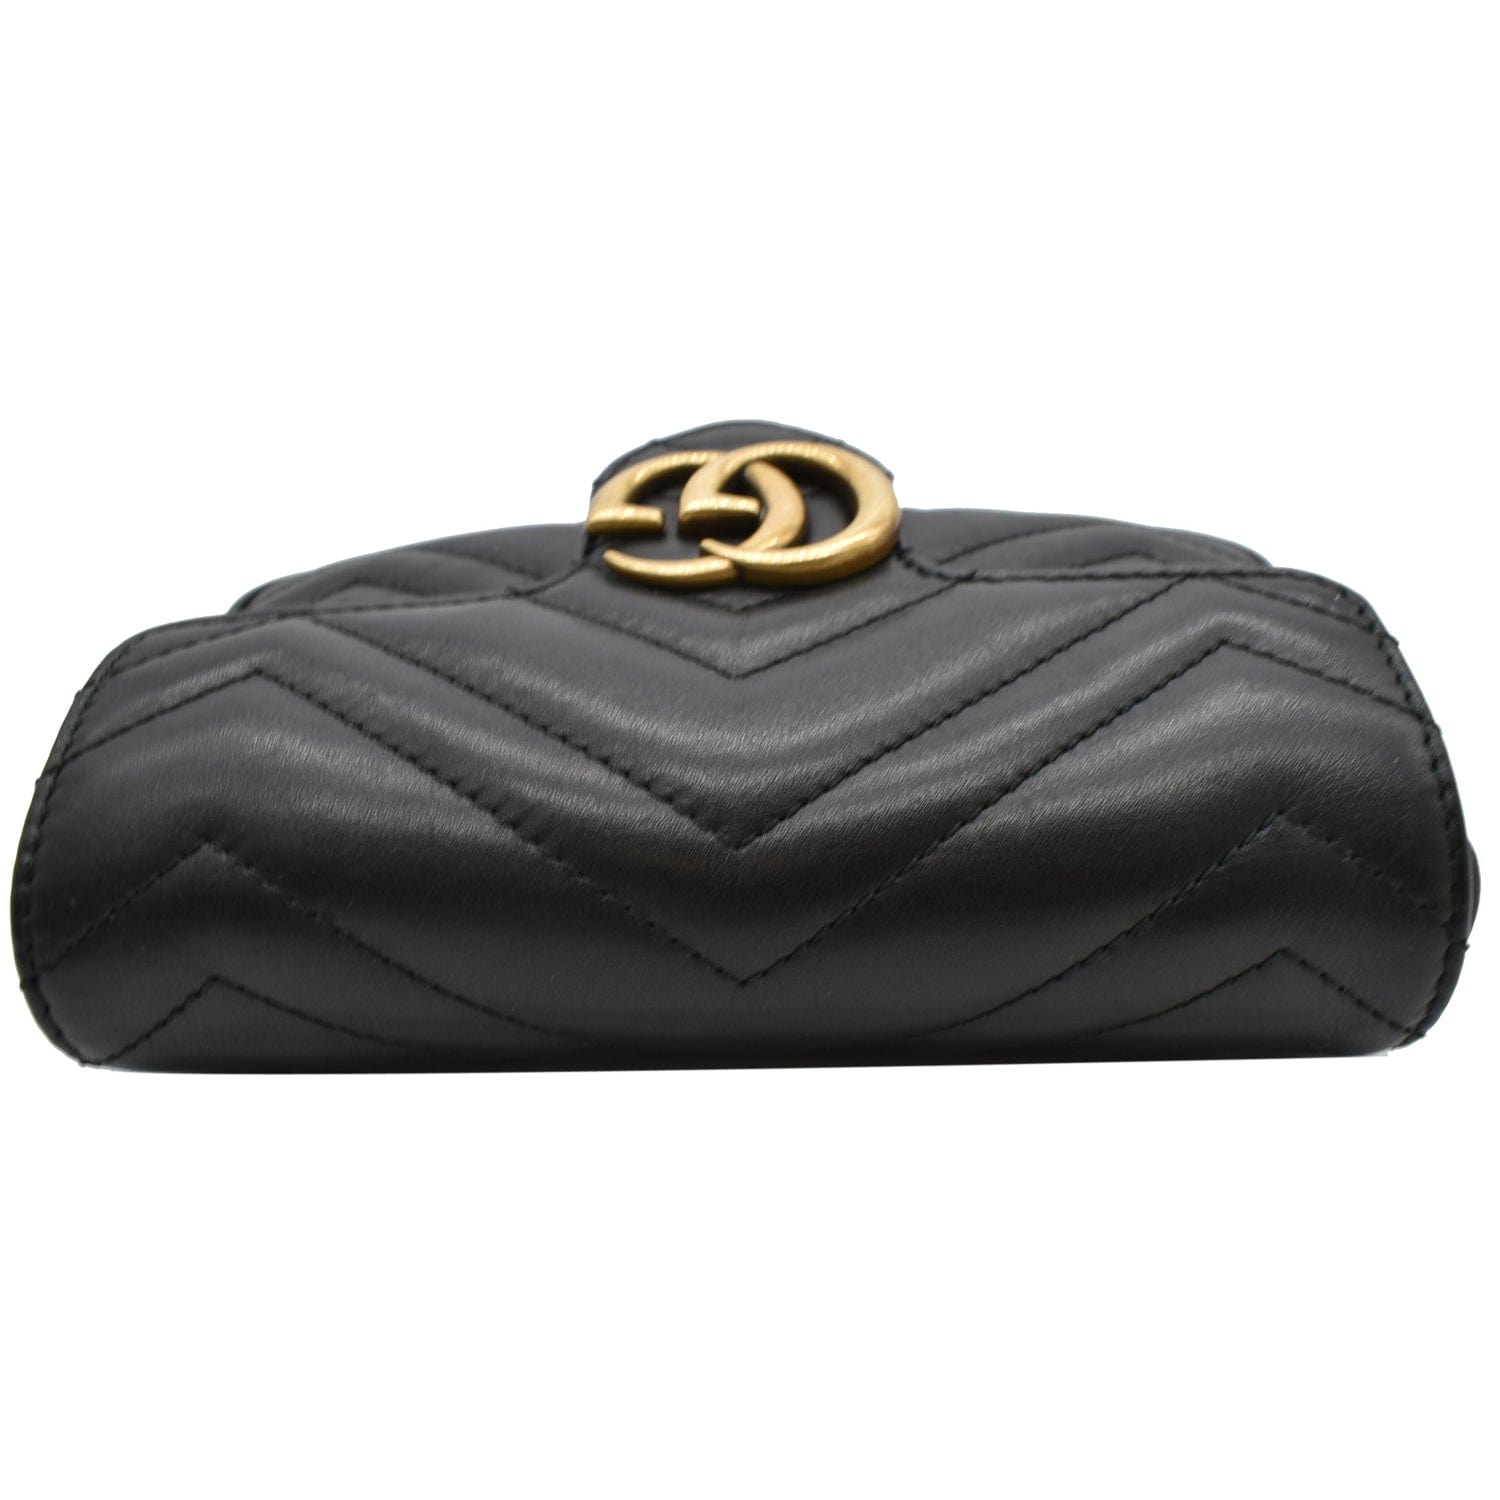 Black Gucci GG Marmont Matelasse Crossbody Bag – Designer Revival